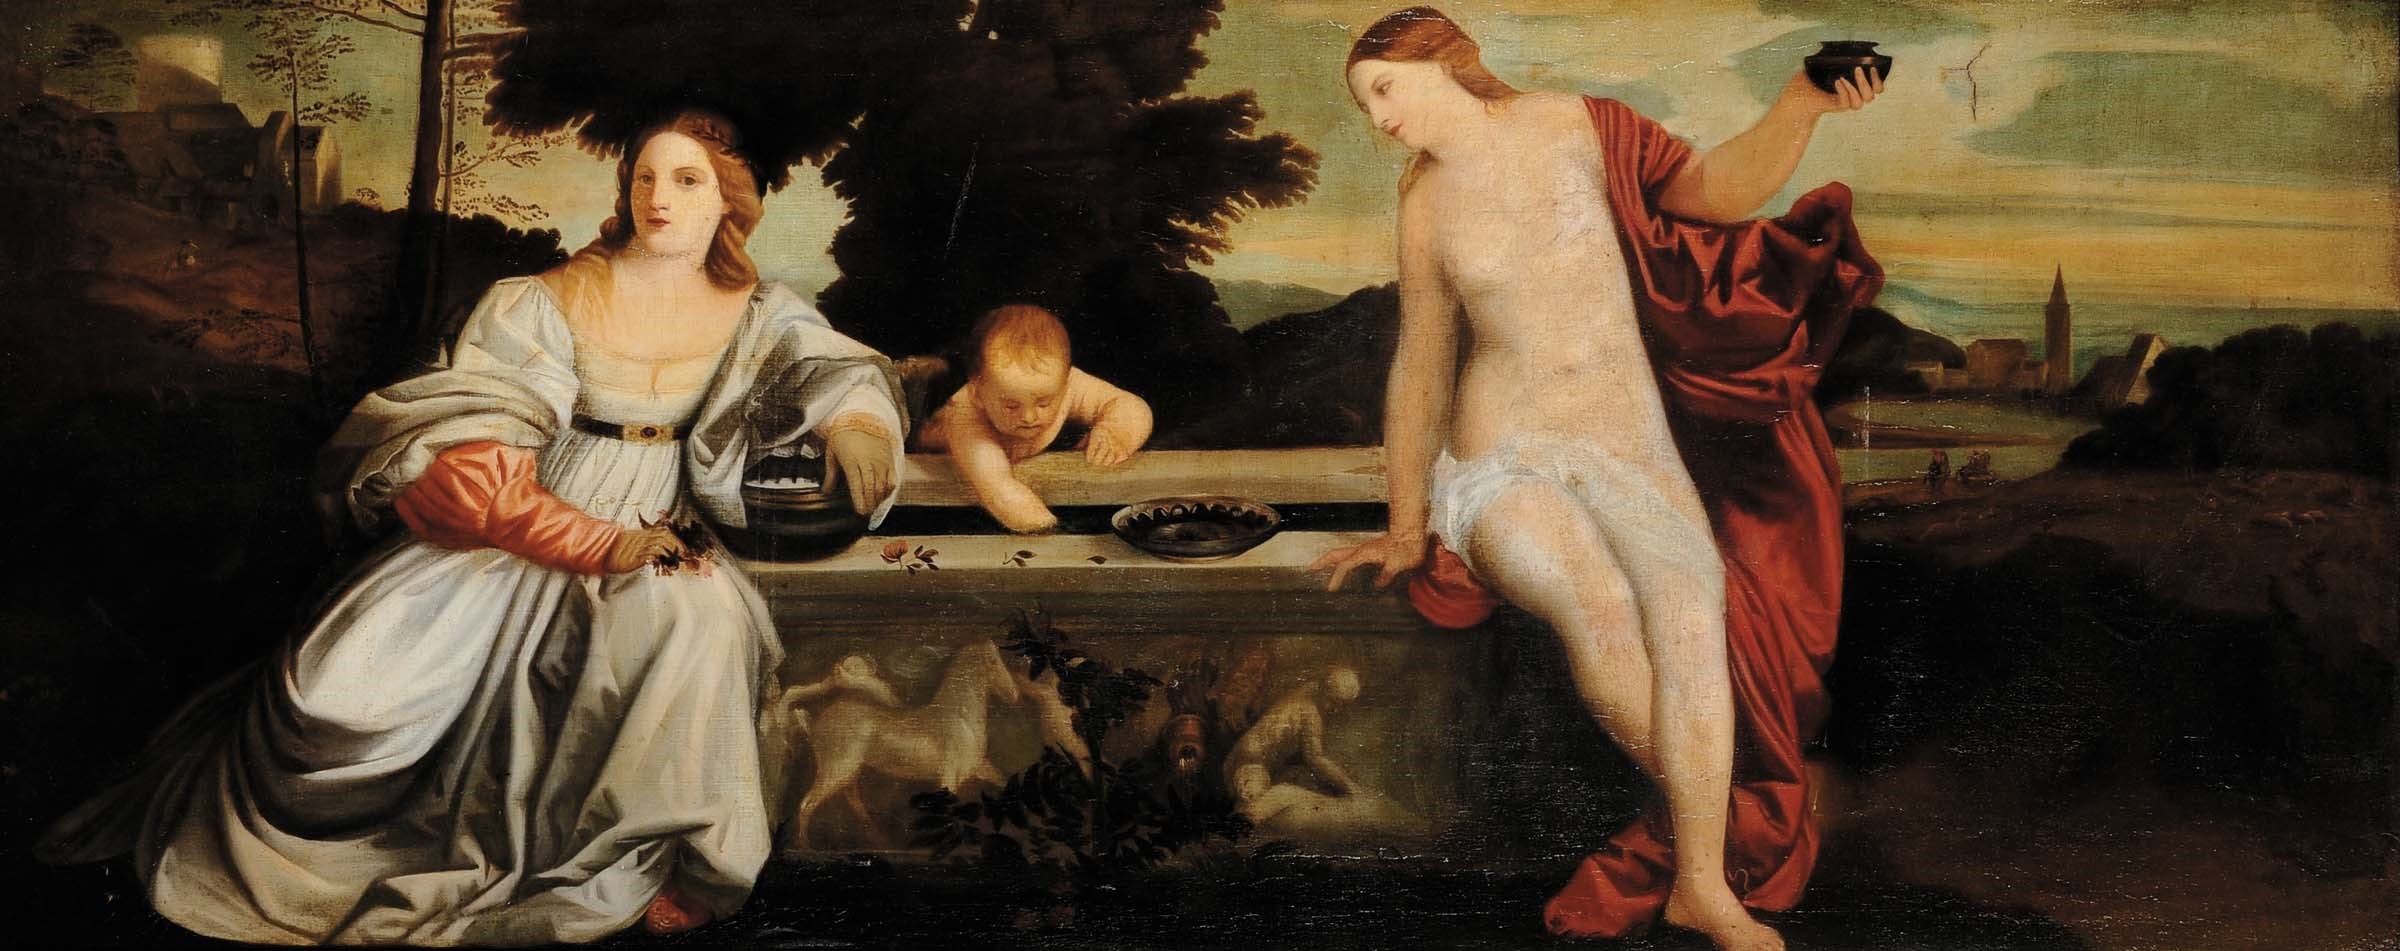 Amor Sacro e Amor profano by Titian